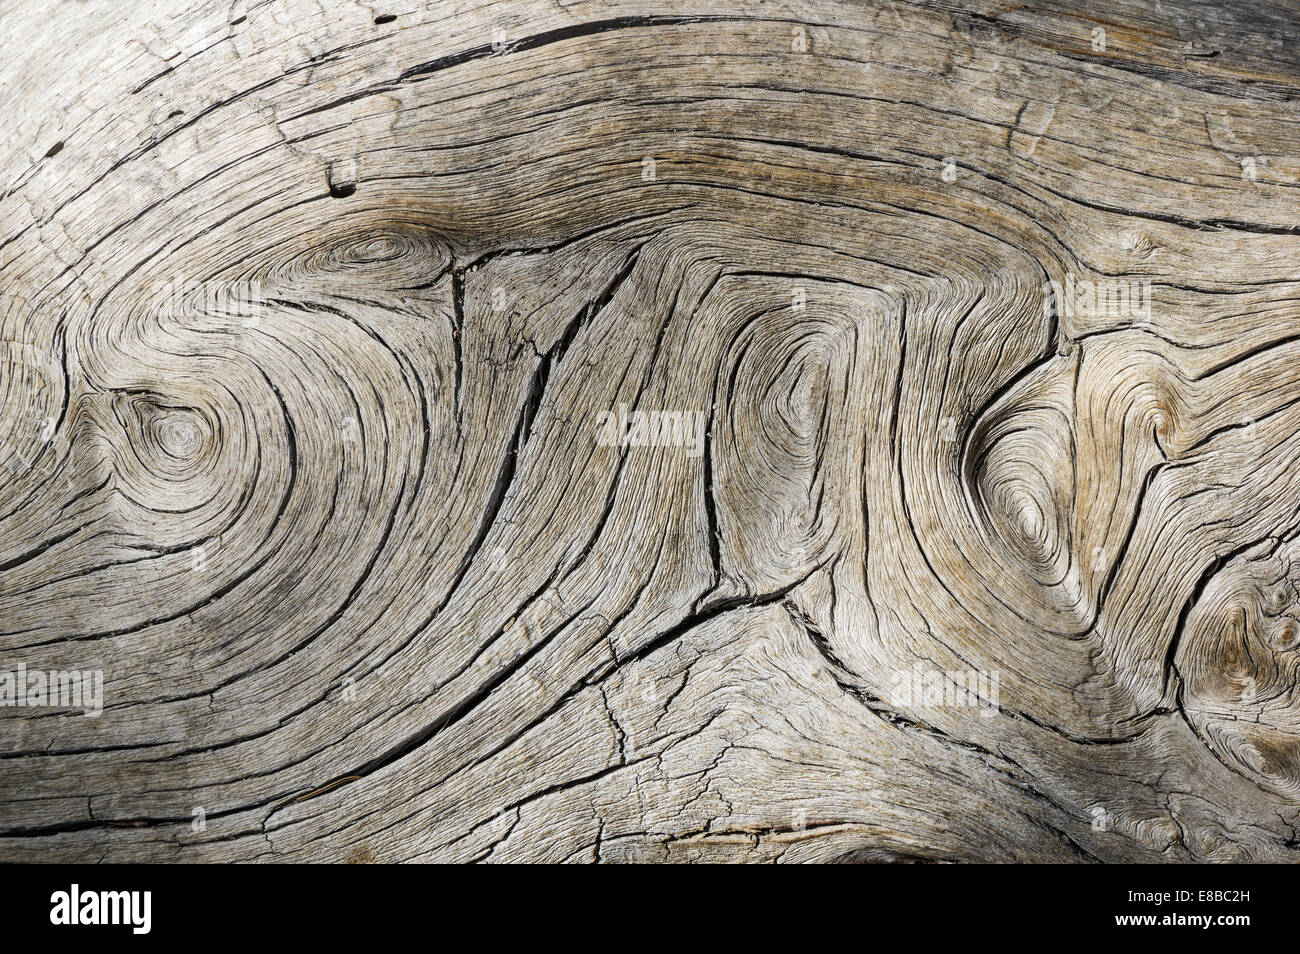 weathered gray wood with swirled grain background texture Stock Photo